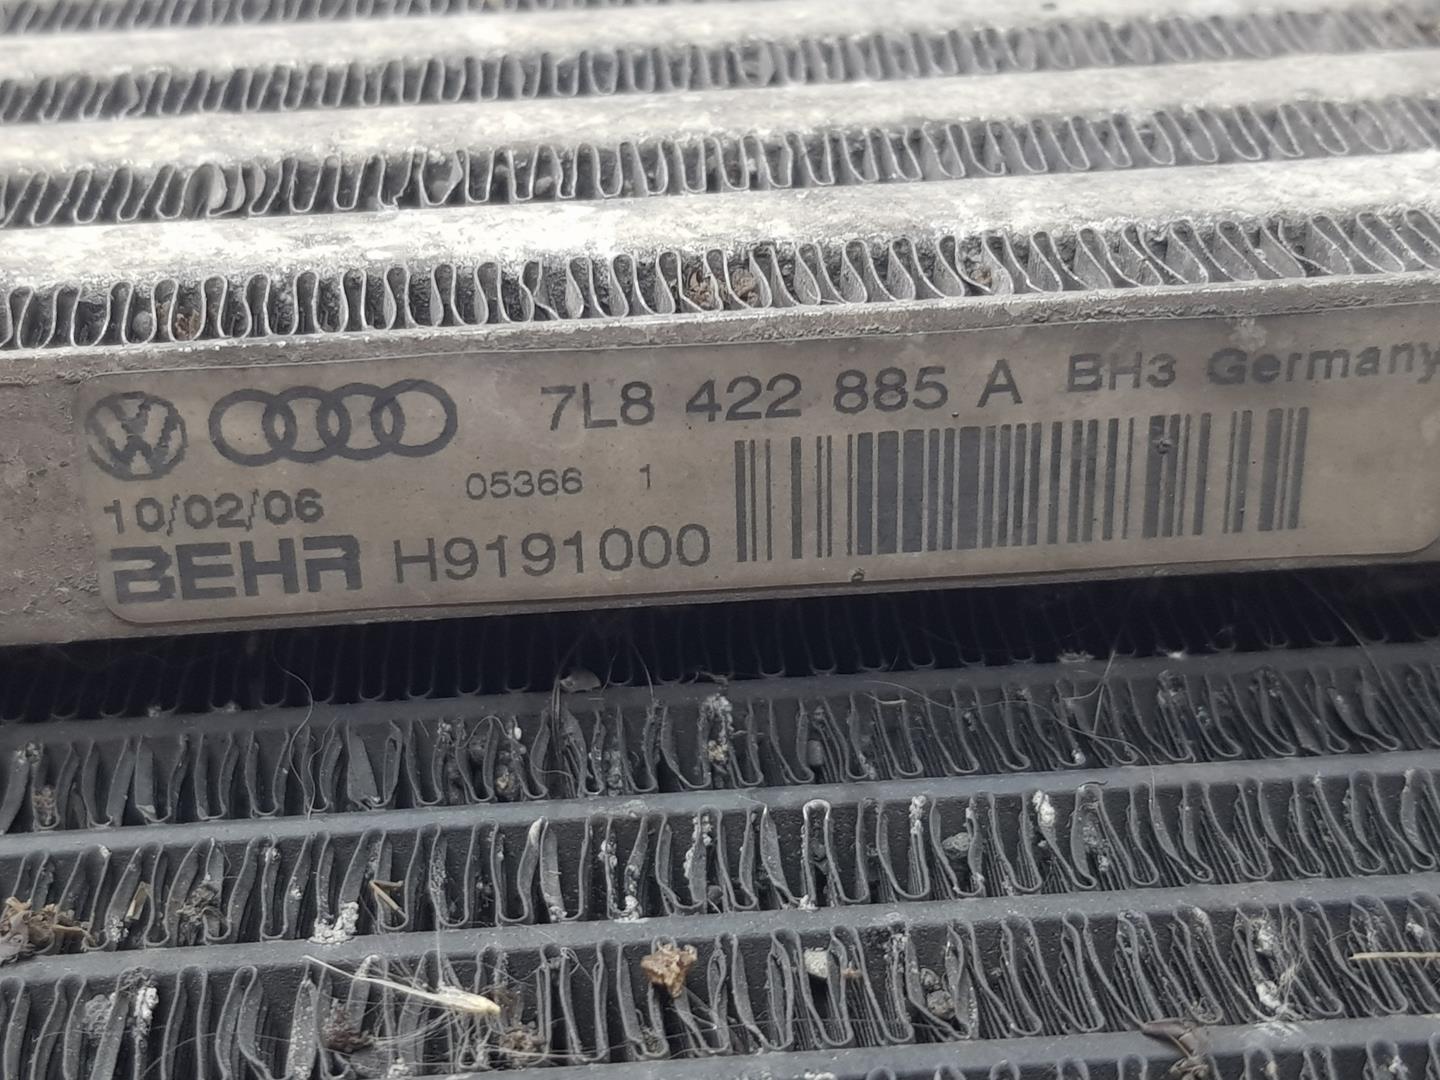 AUDI Q7 4L (2005-2015) Охлаждающий радиатор 4L0260401, 7L8422885A 24156803